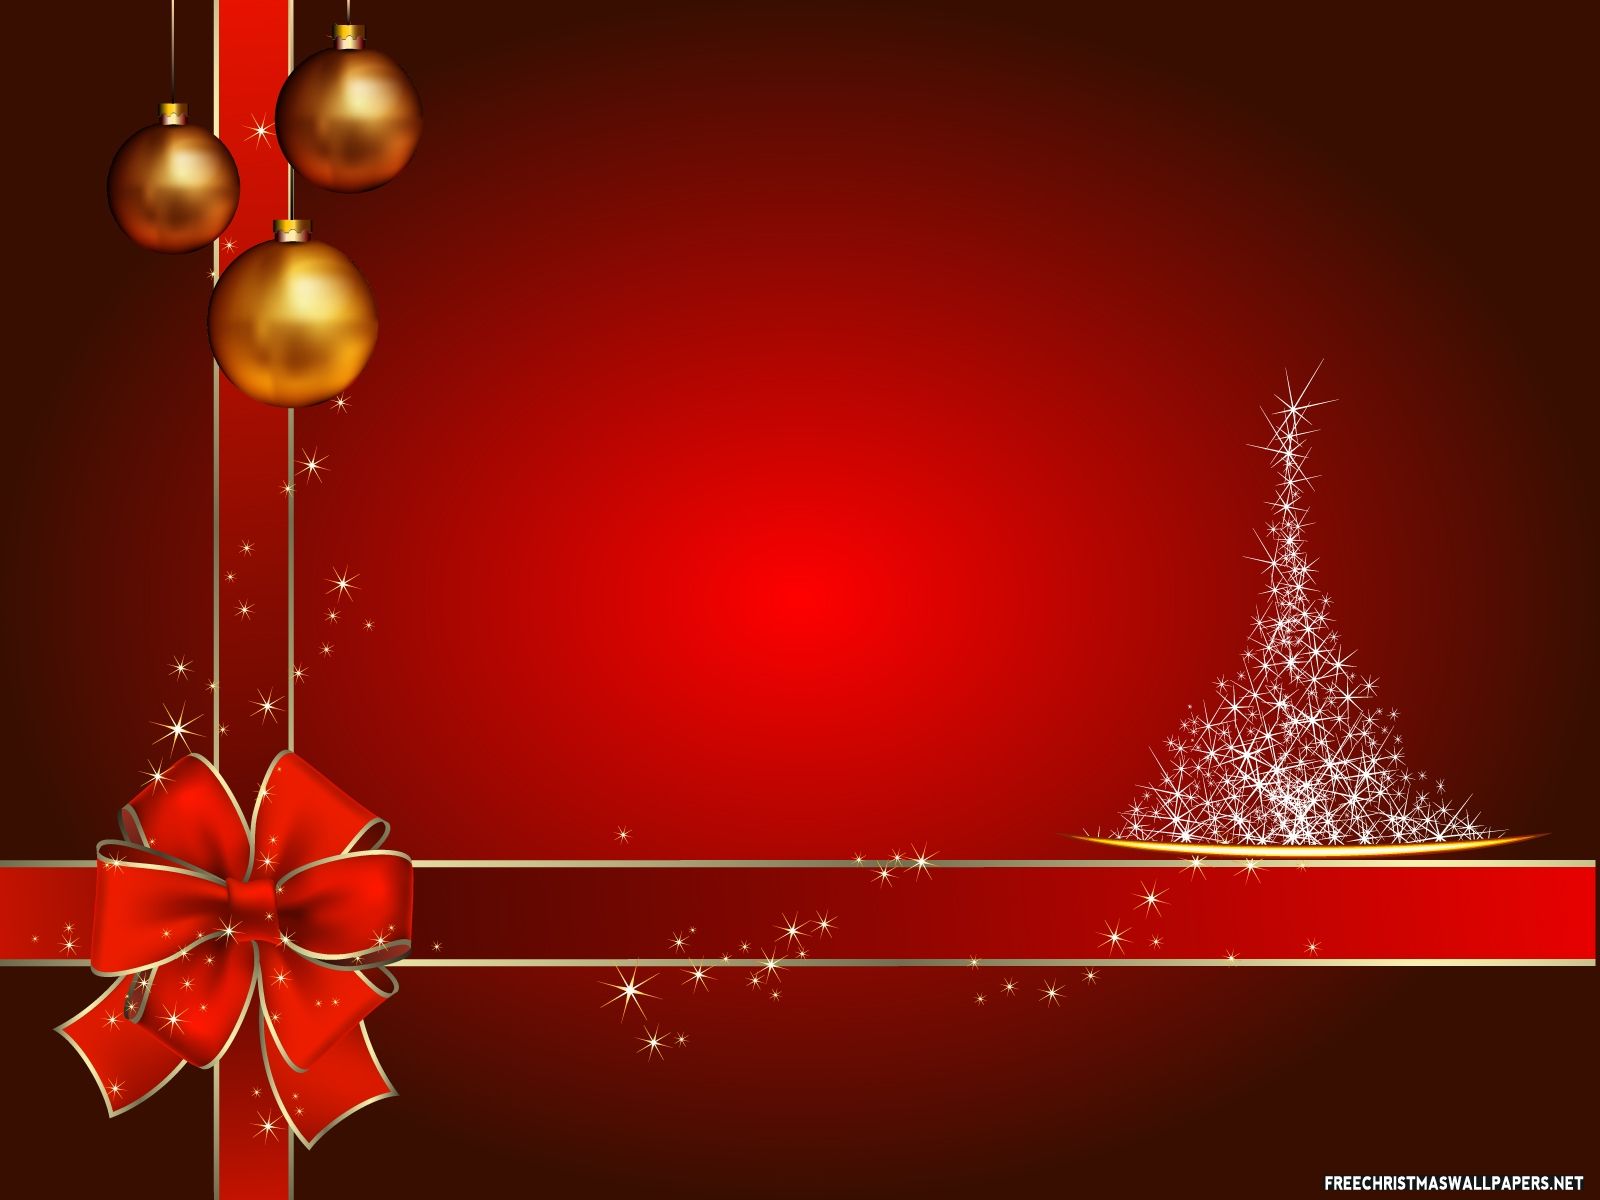 Christmas Present Desktop Background. Present Wallpaper, Present Background and Holiday Present Wallpaper